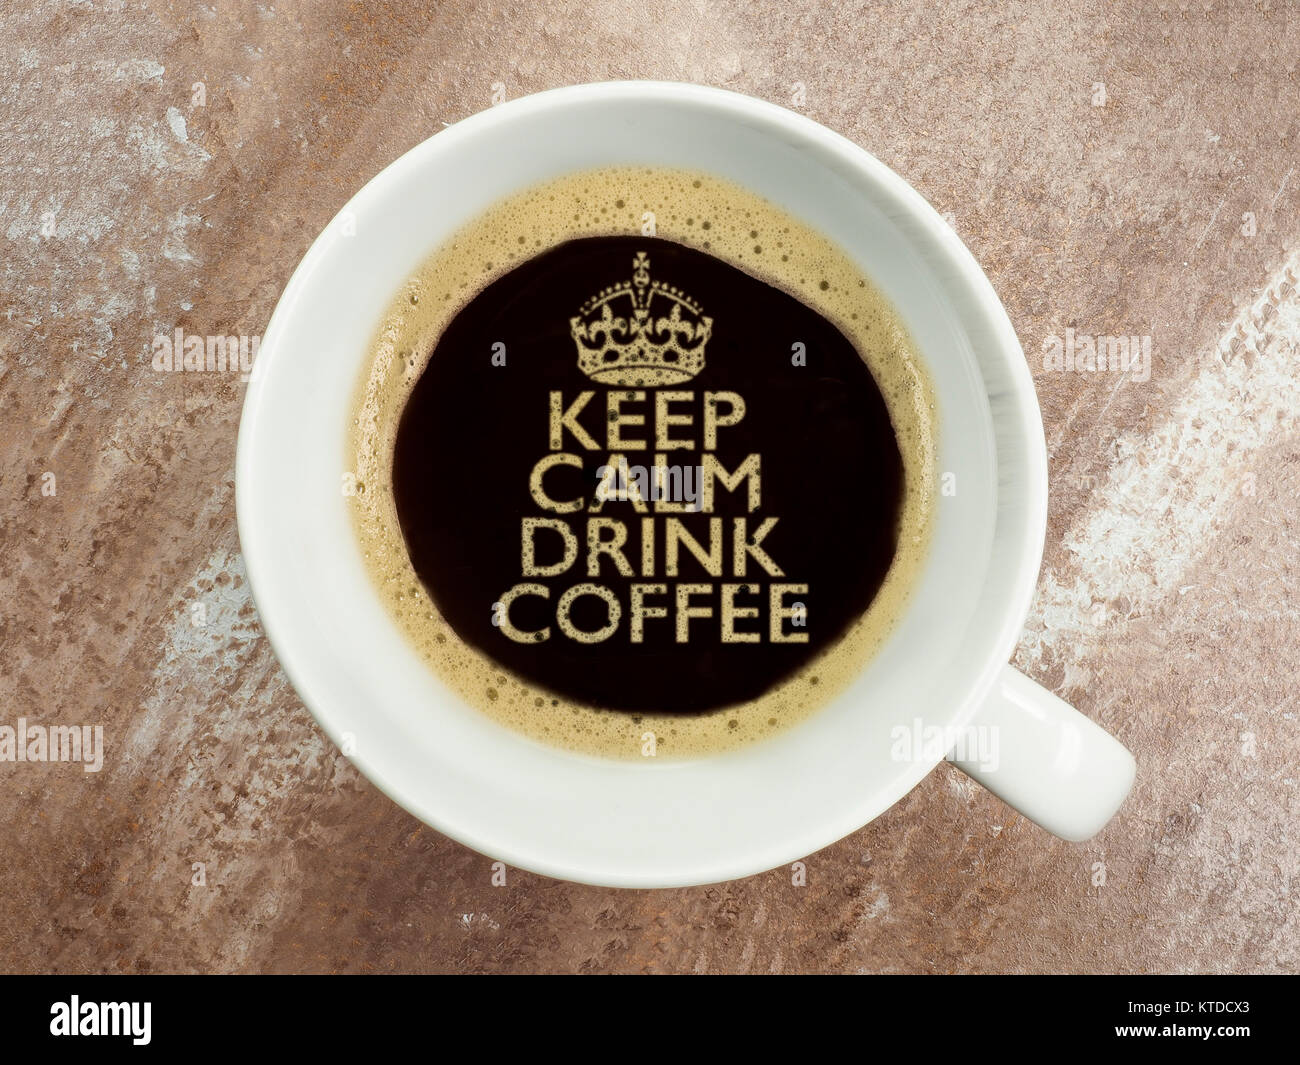 KEEP CALM AND DRINK COFFEE Stock Photo - Alamy